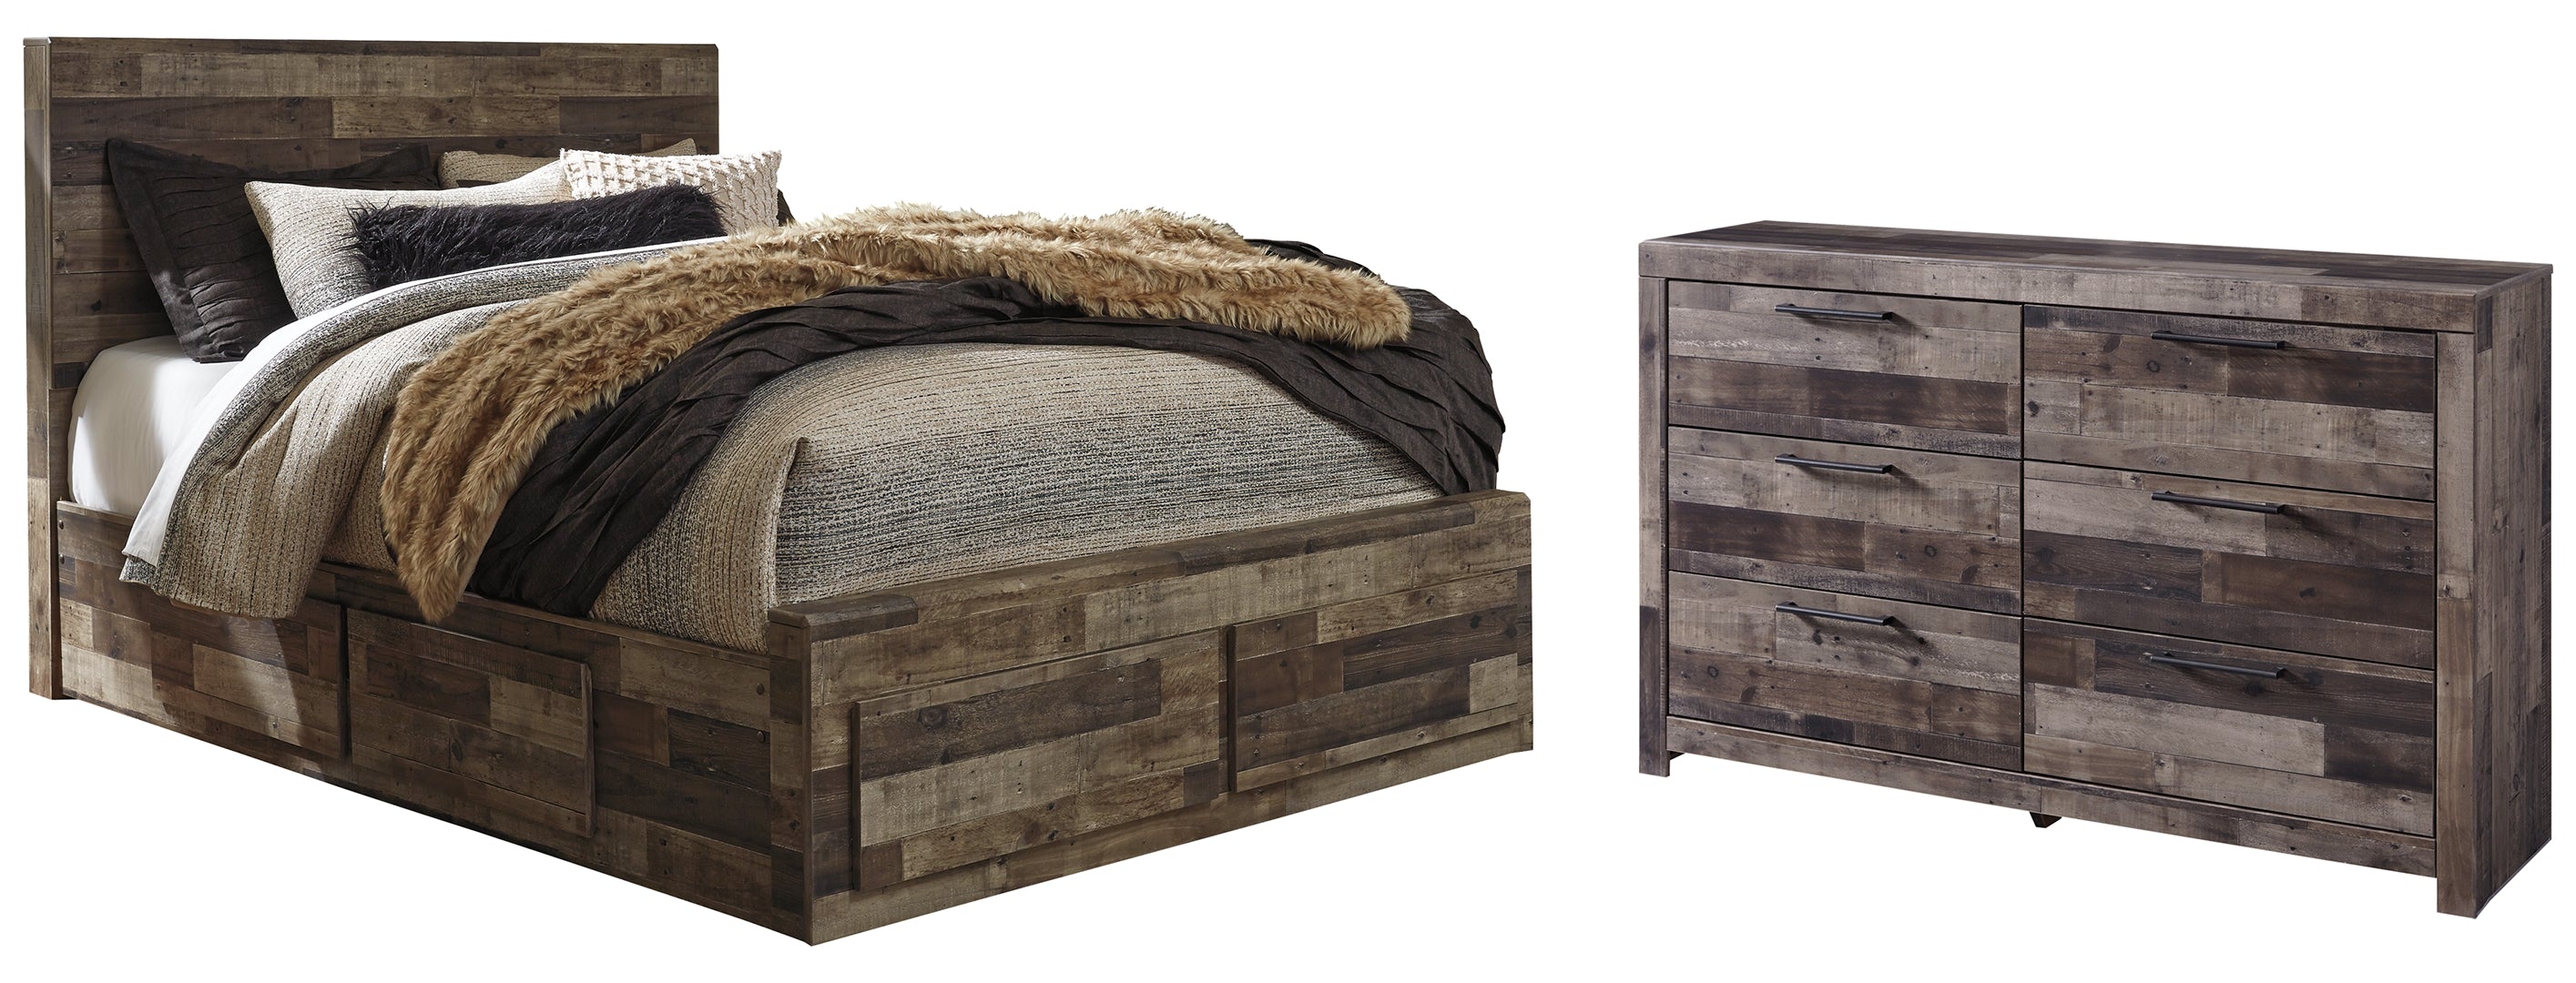 Derekson Queen Panel Bed with 6 Storage Drawers with Dresser